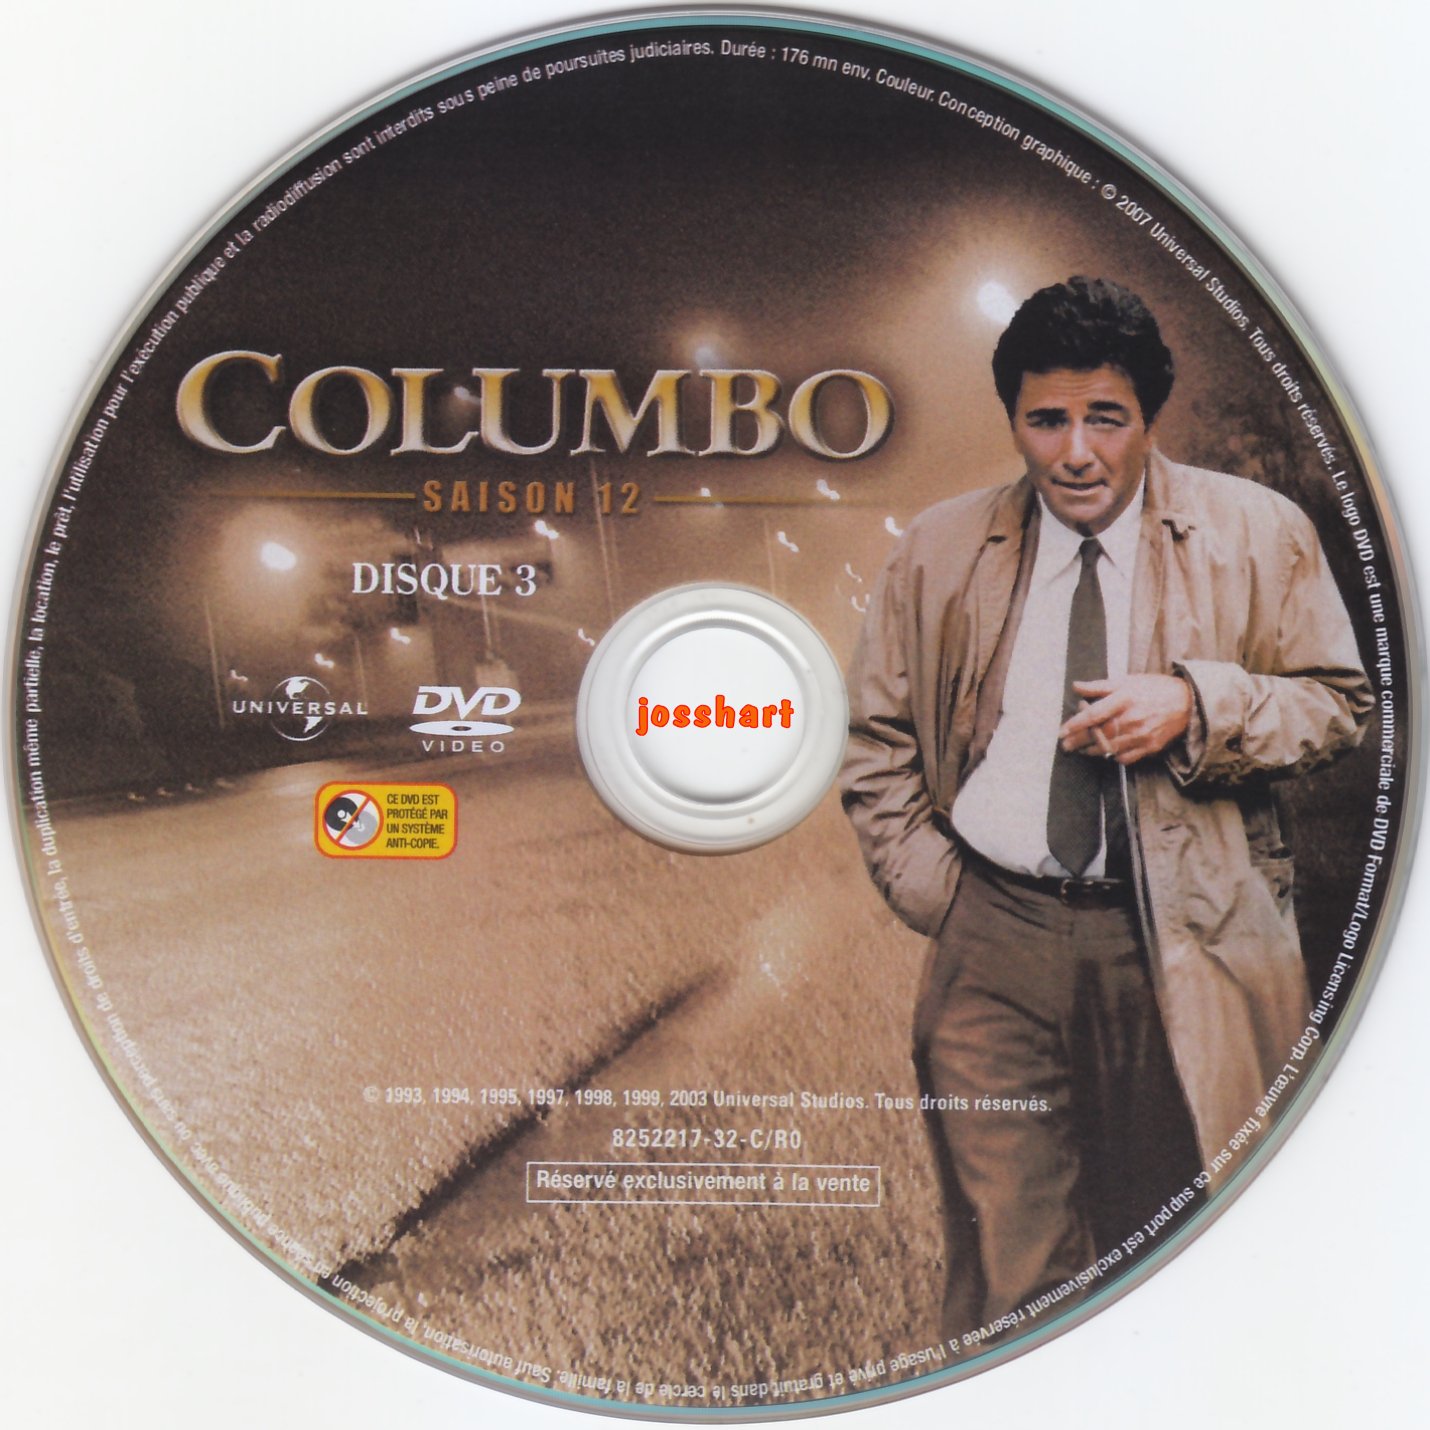 Columbo S12 DISC3